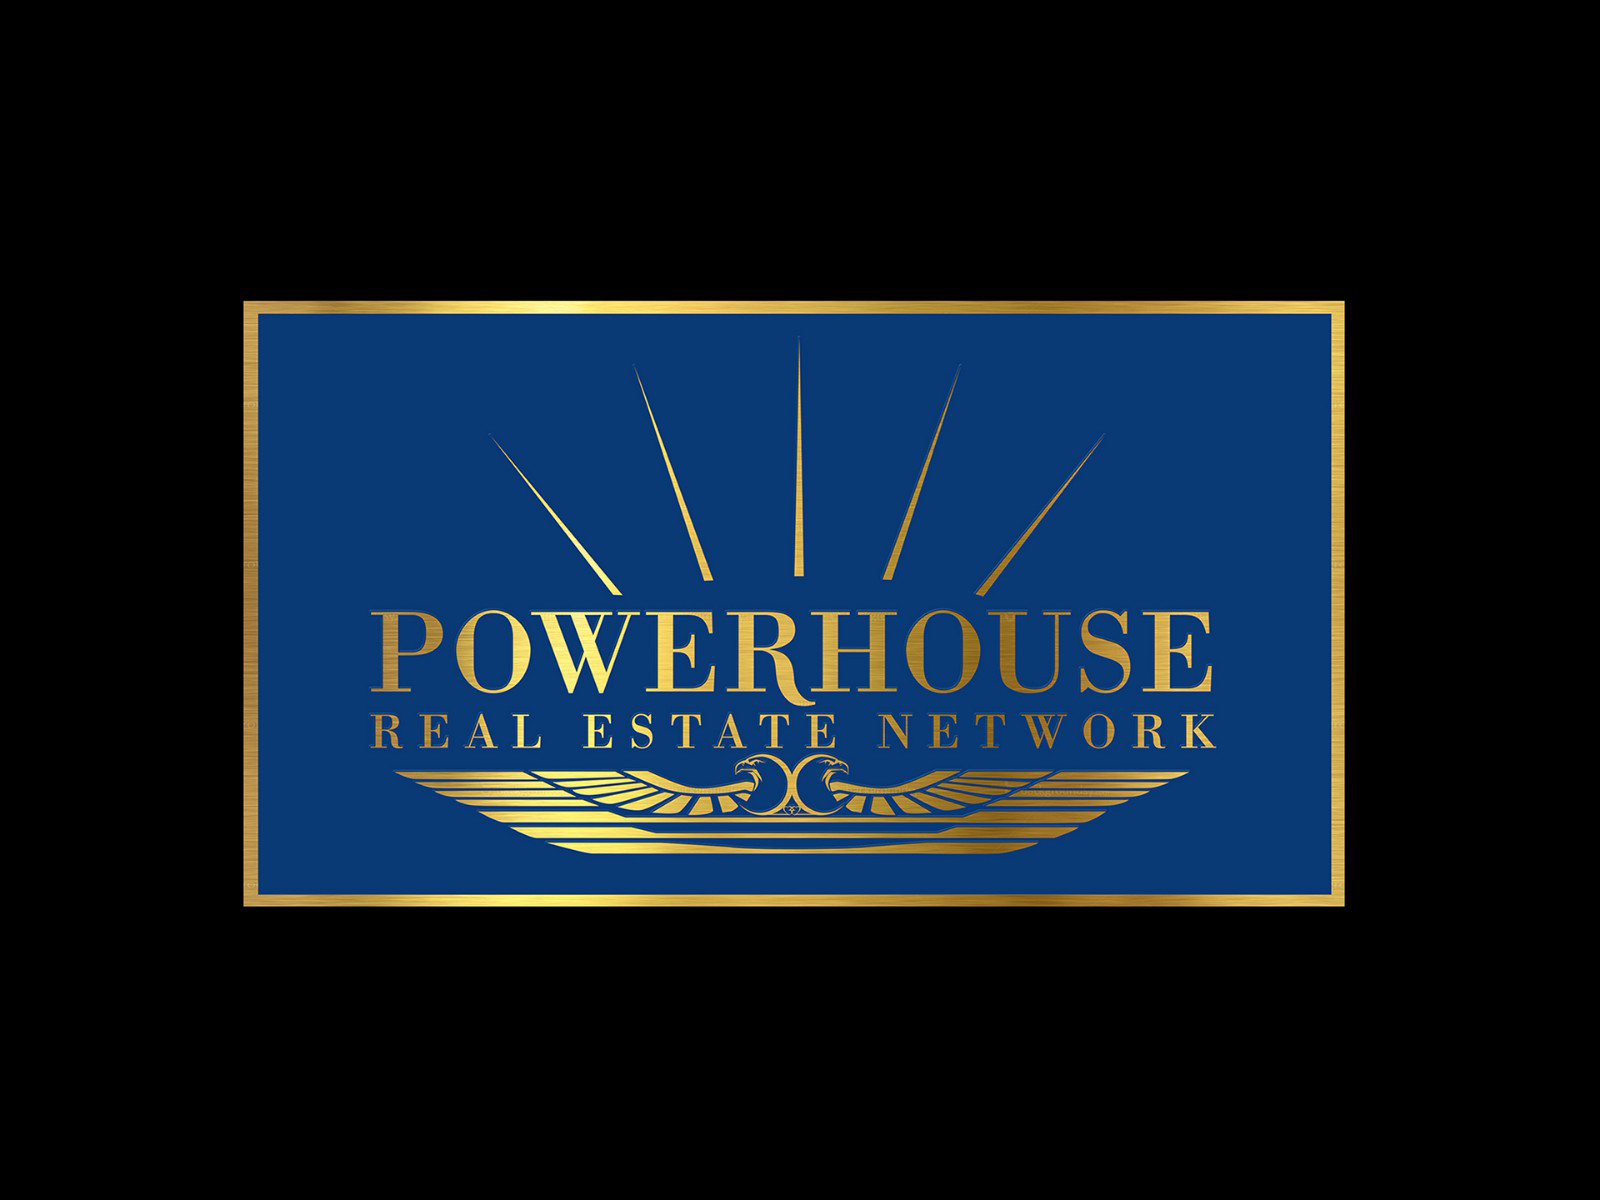 Powerhouse Real Estate Network